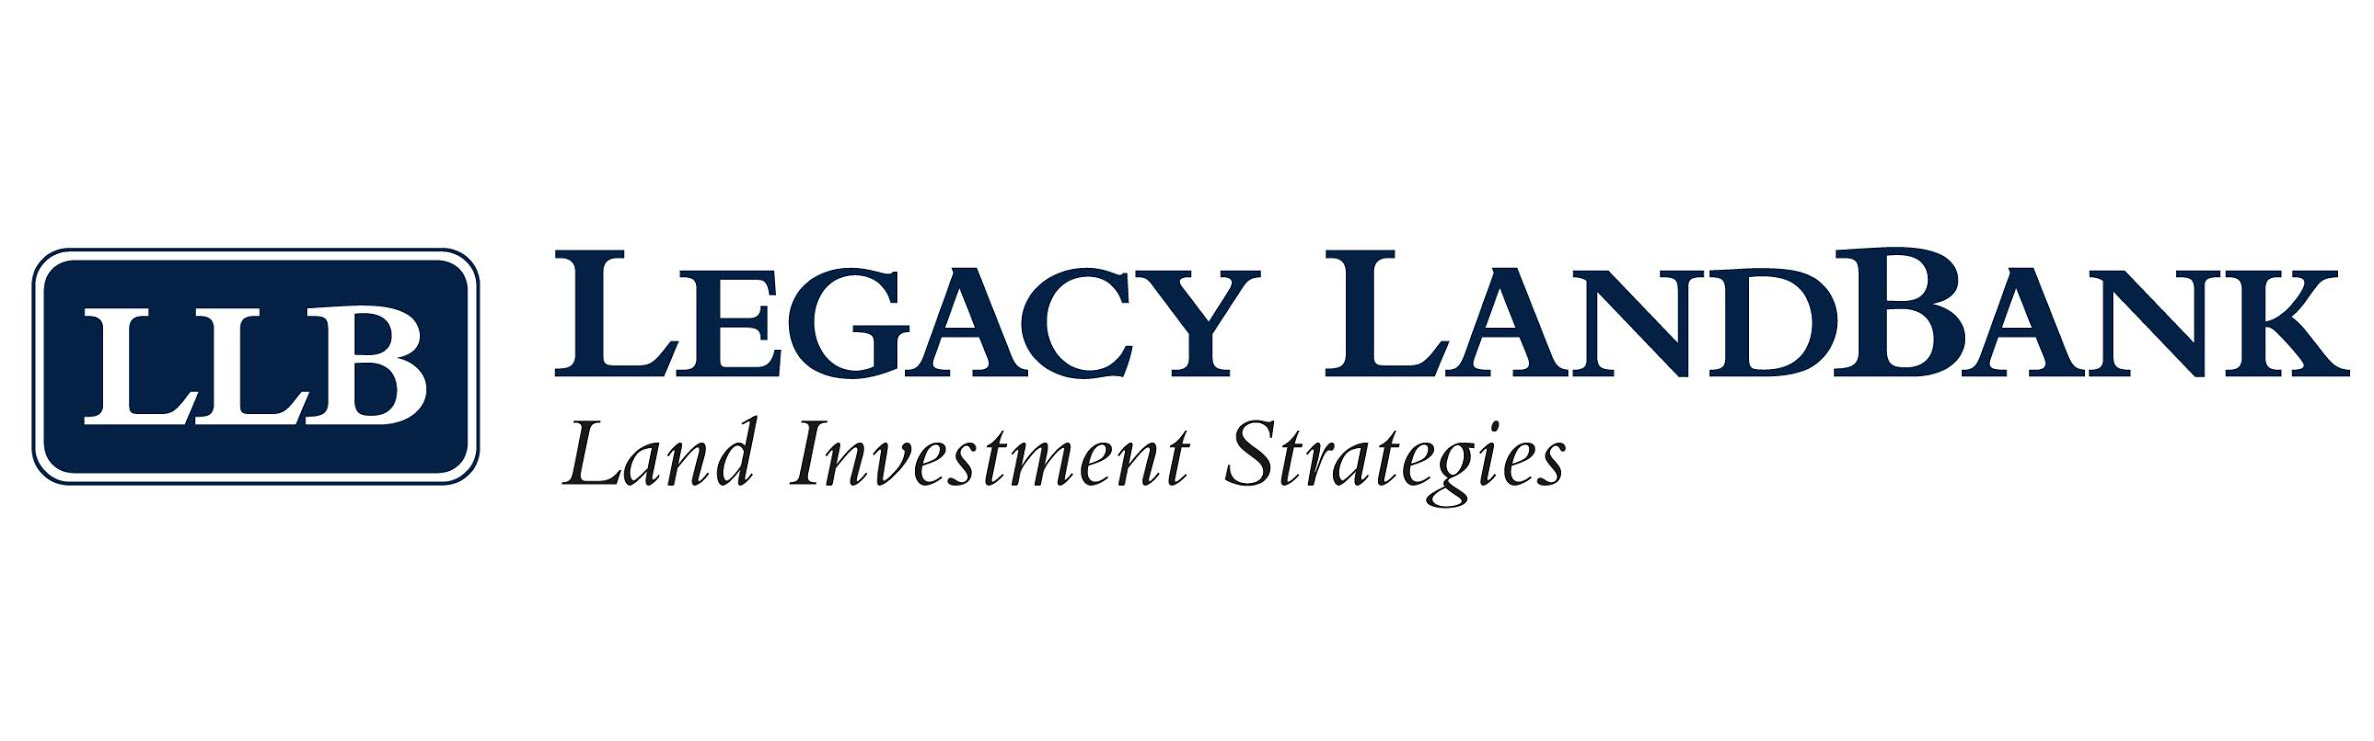 Legacy LandBank